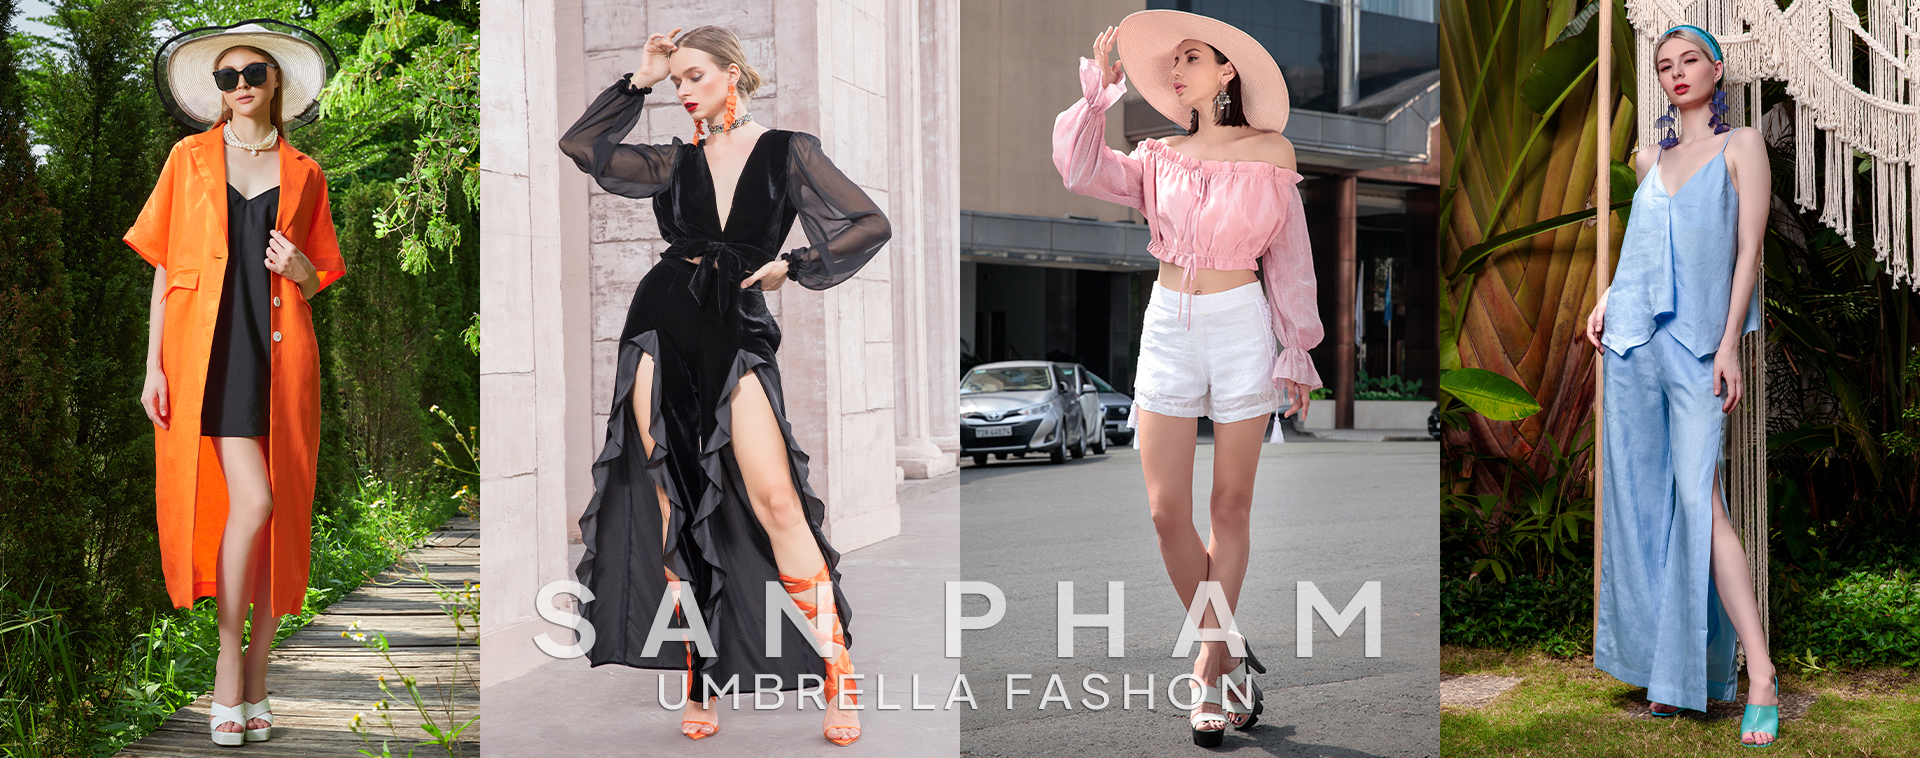 - Umbrella Fashion